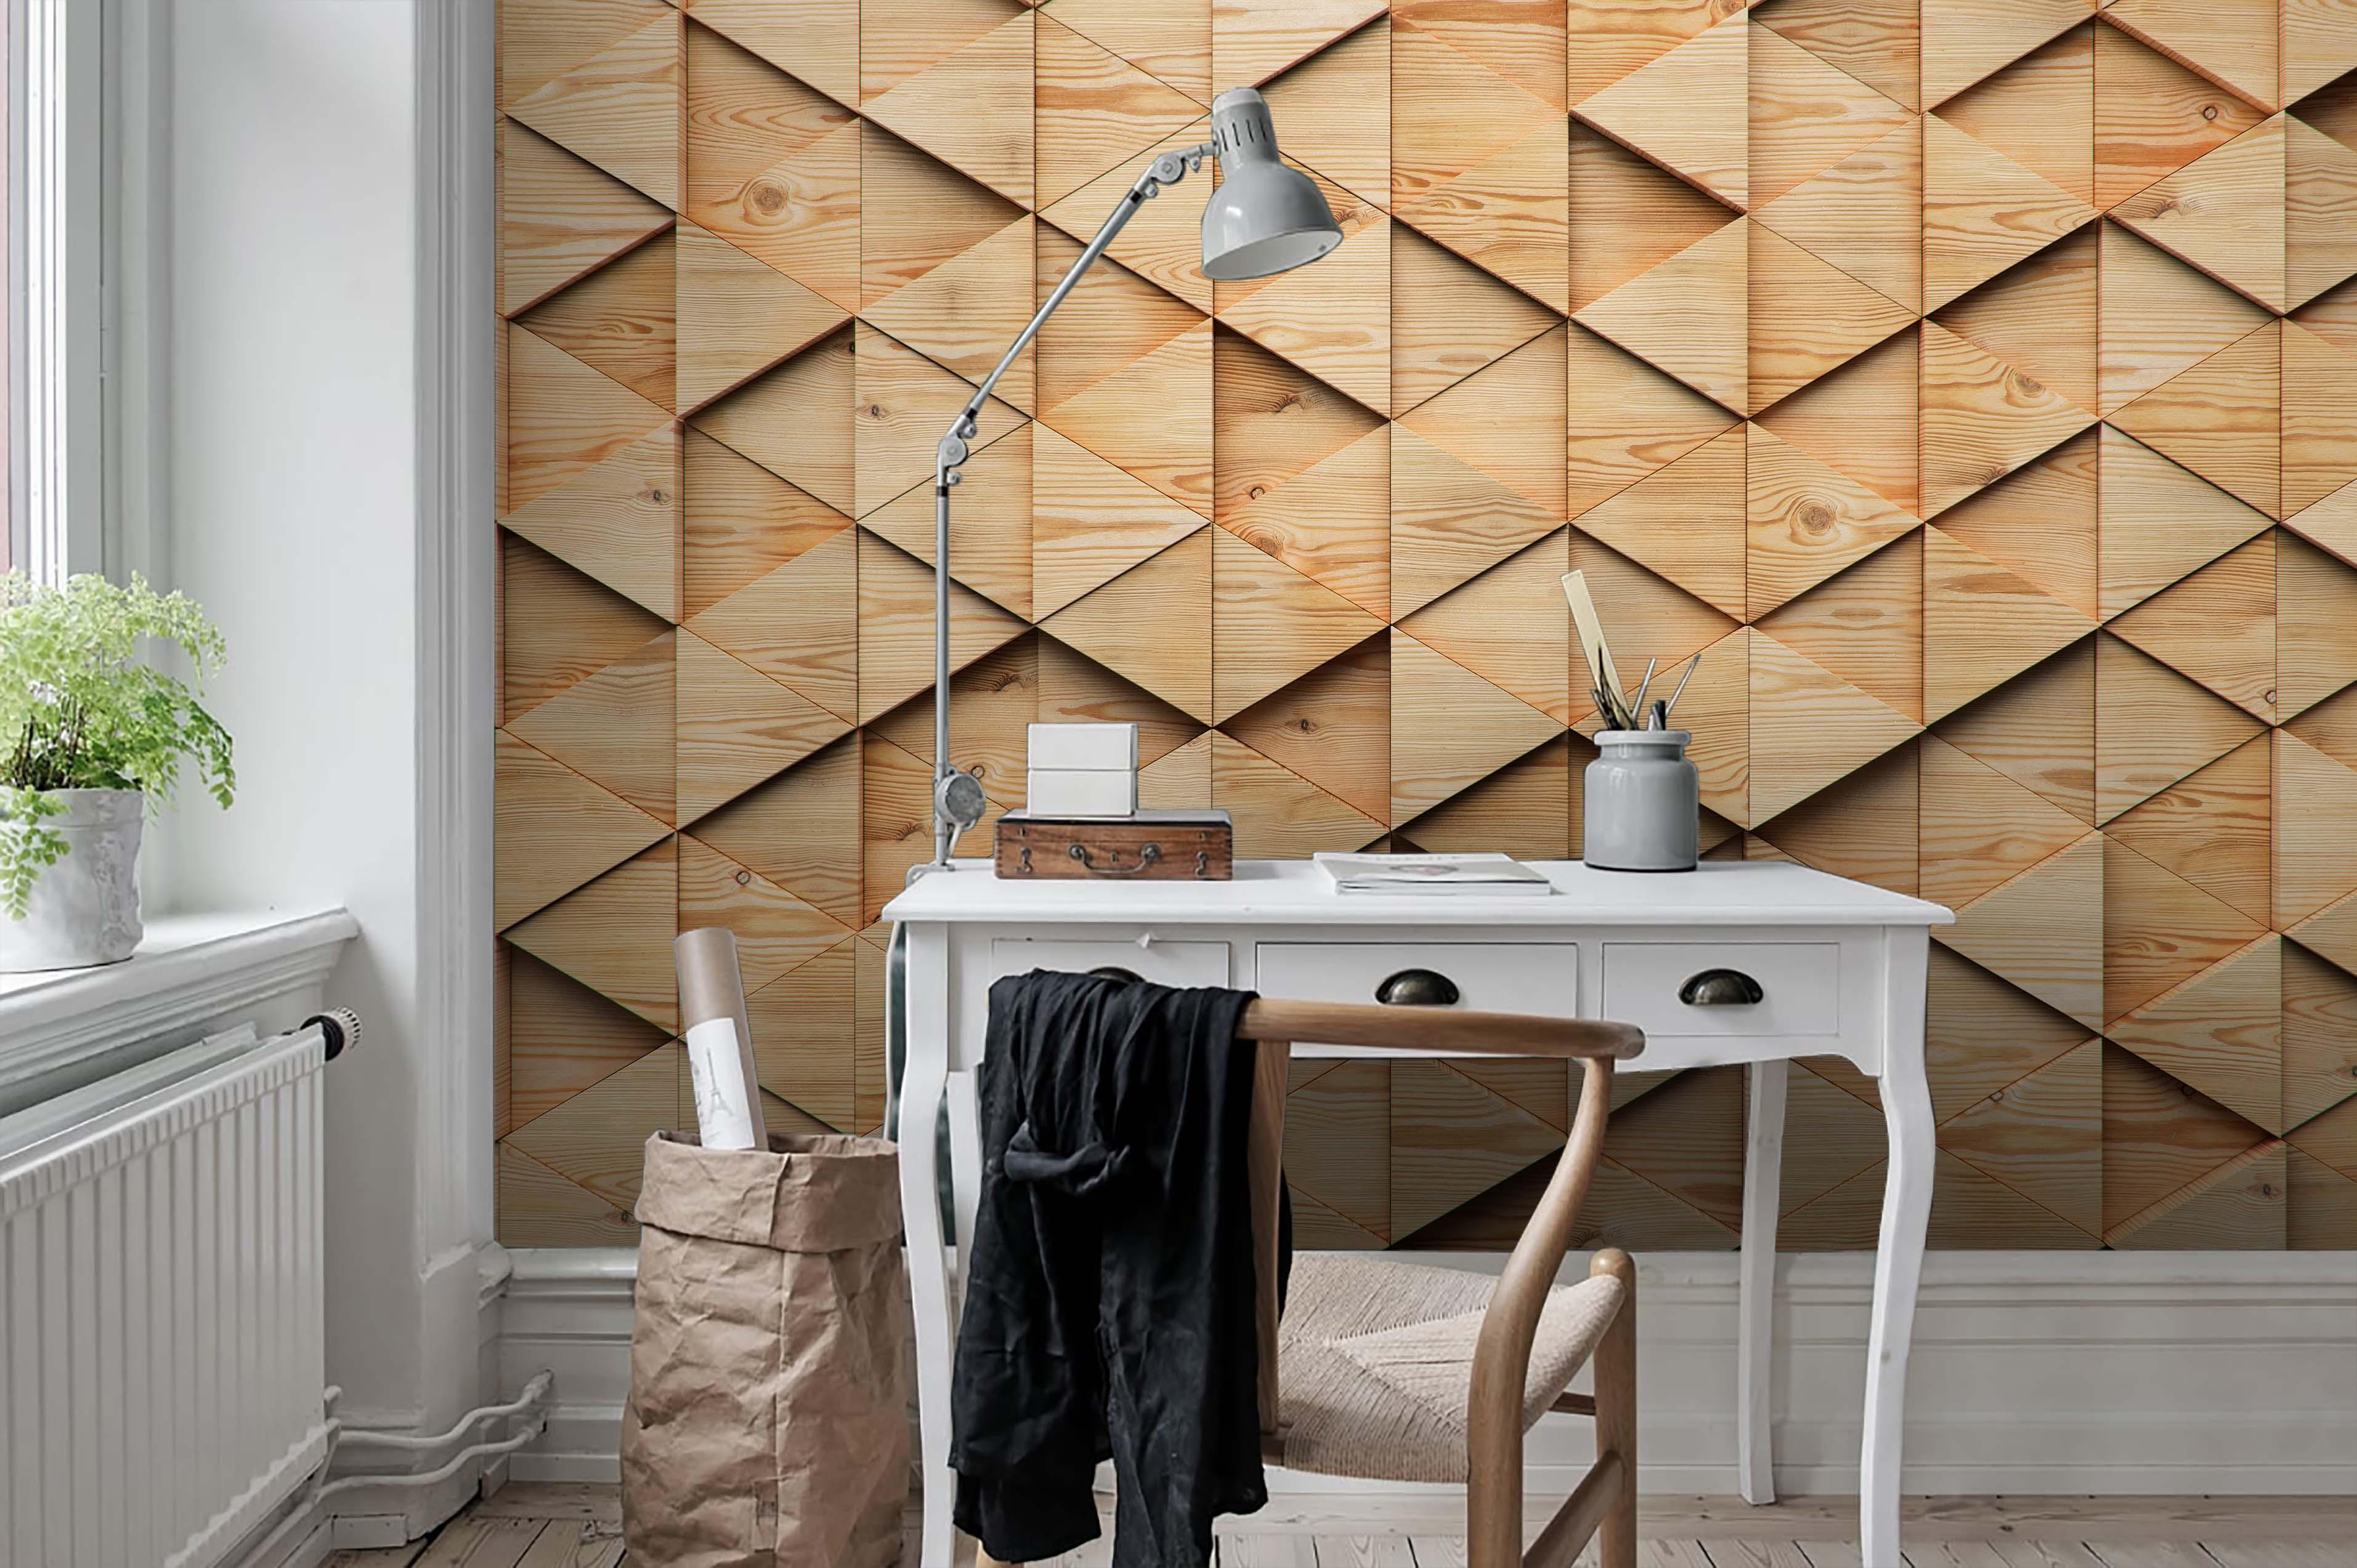 3D Wood Triangle Combination Wall Mural Wallpaper 39- Jess Art Decoration